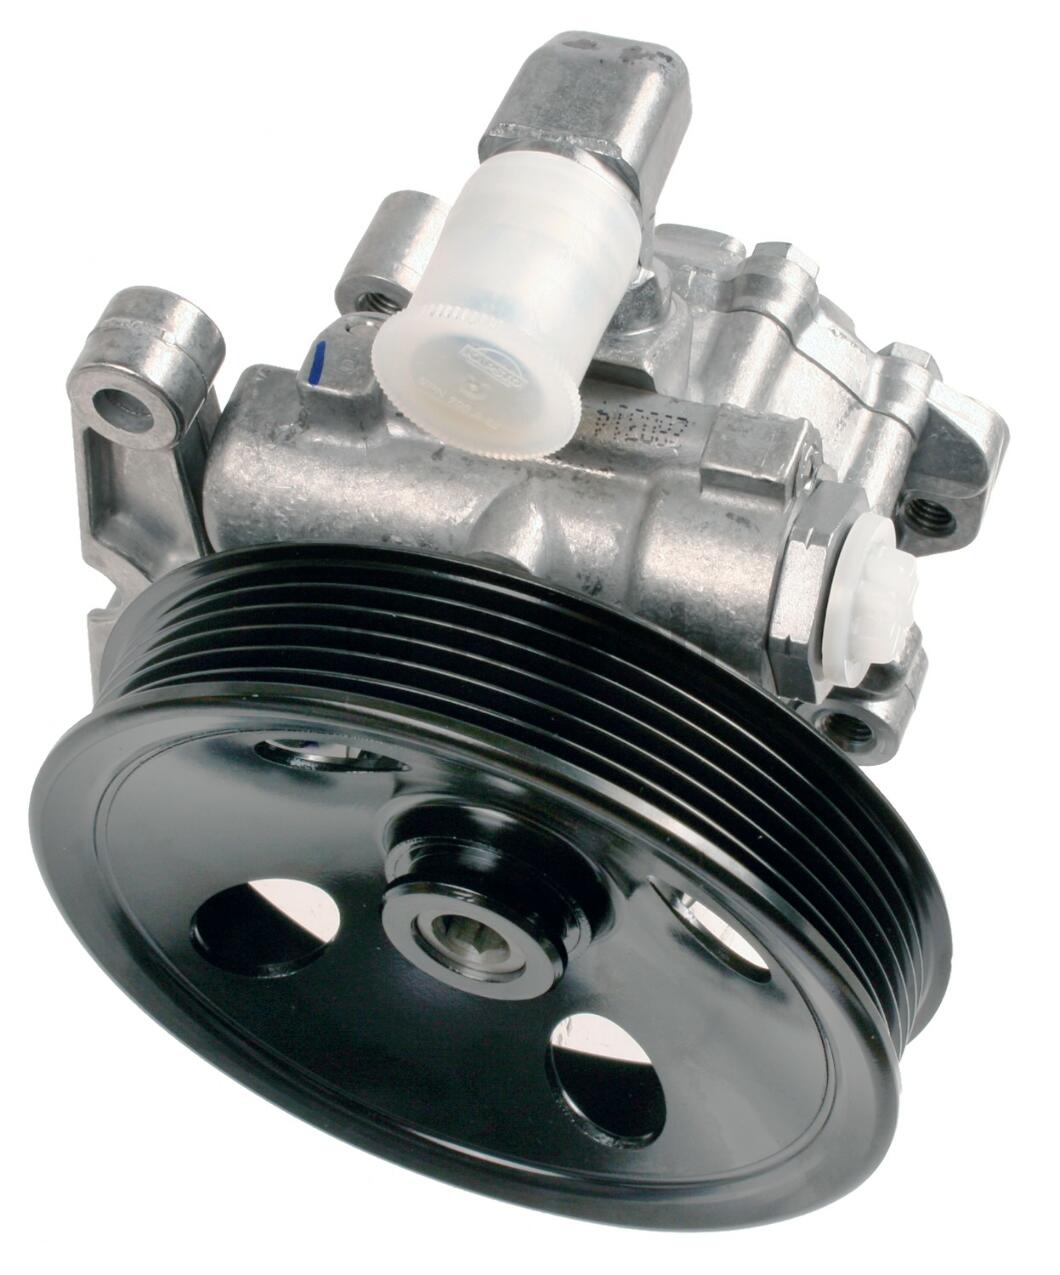 Mercedes Power Steering Pump (Rebuilt) 002466240180 - Bosch KS01000533